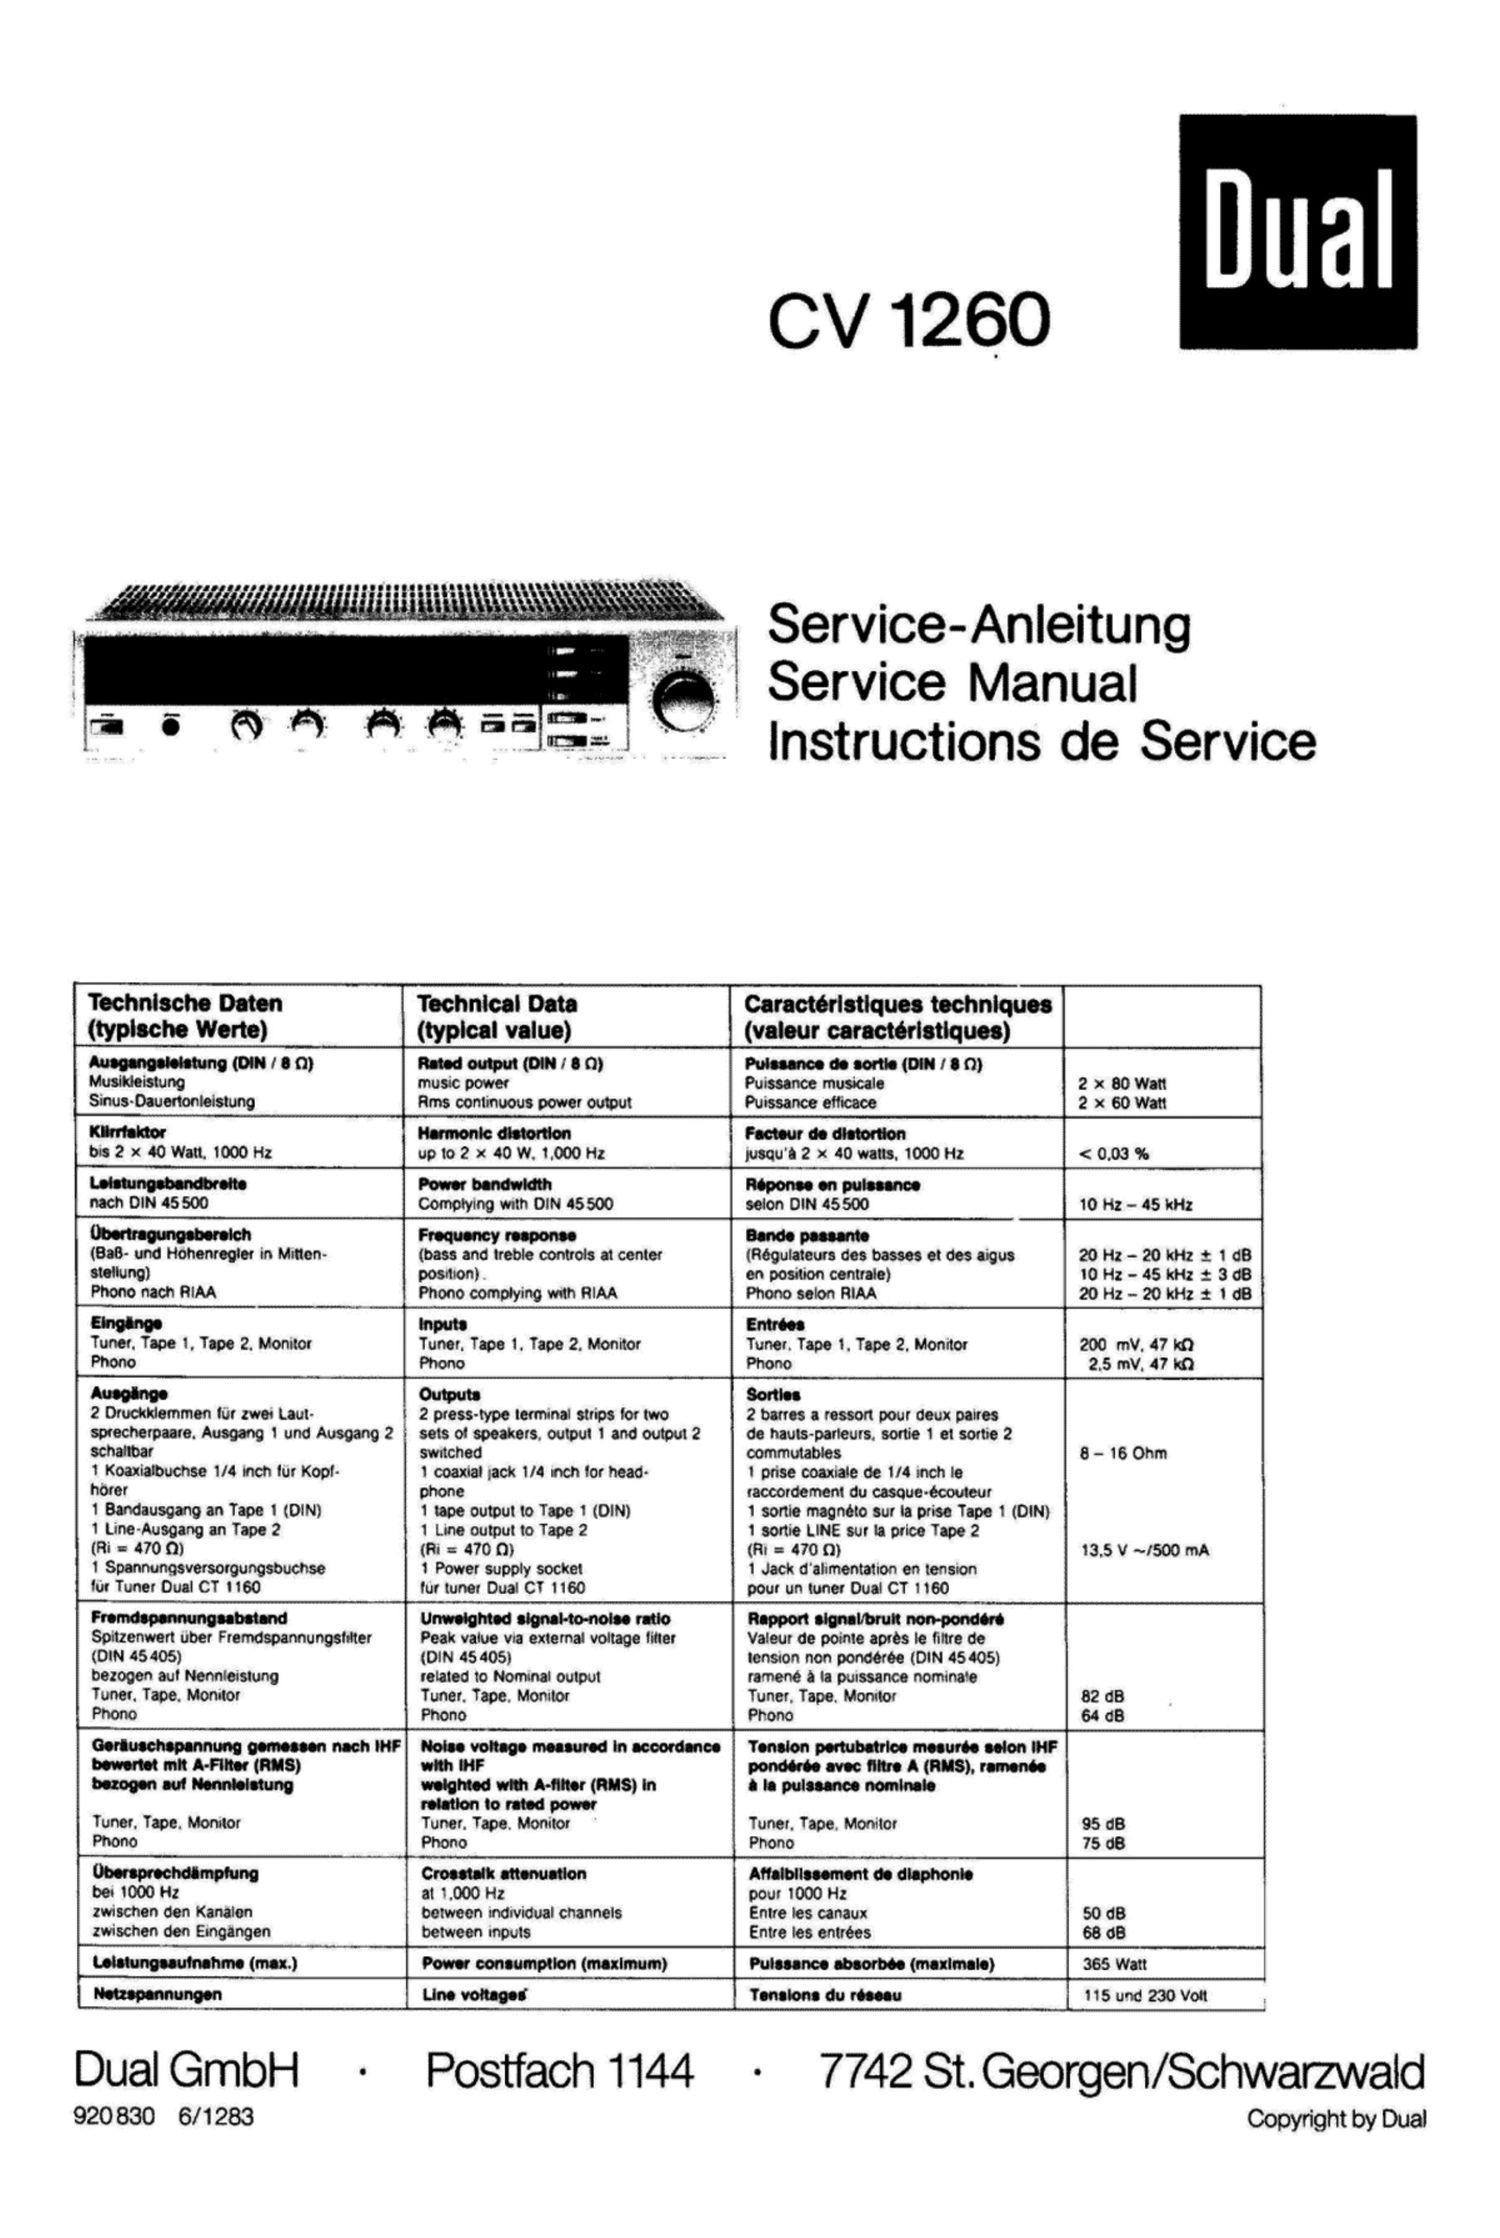 Dual CV 1260 Service Manual (1)